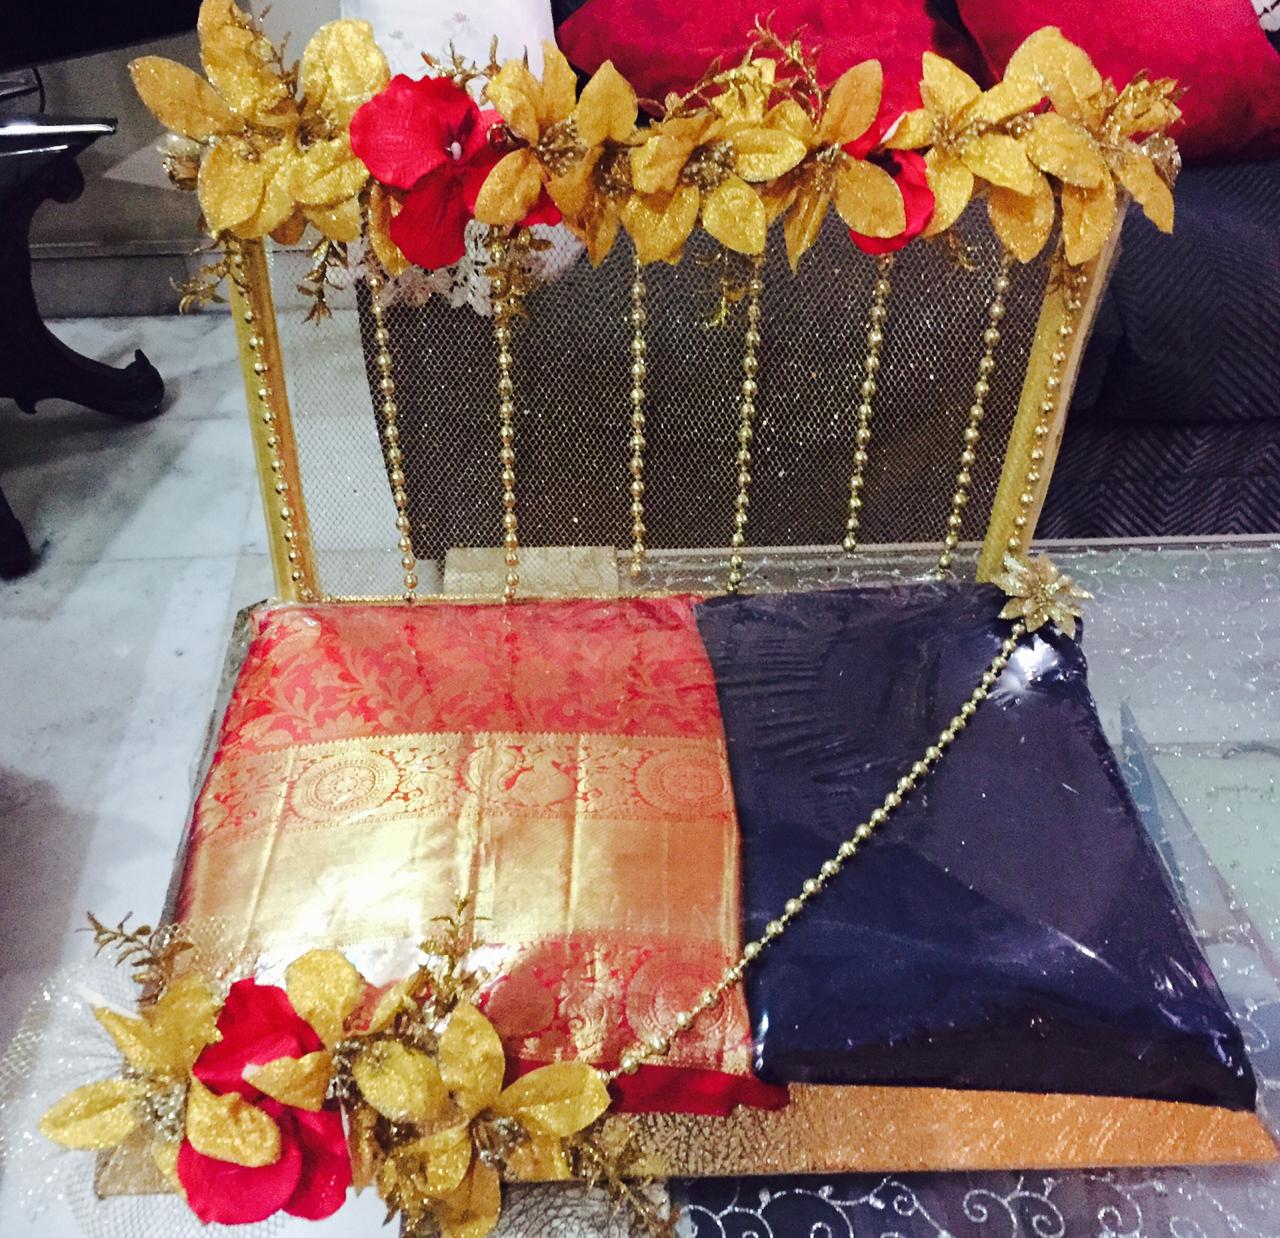 Vriddhi Gift Packing - Delhi NCR | Wedding Gift Packers